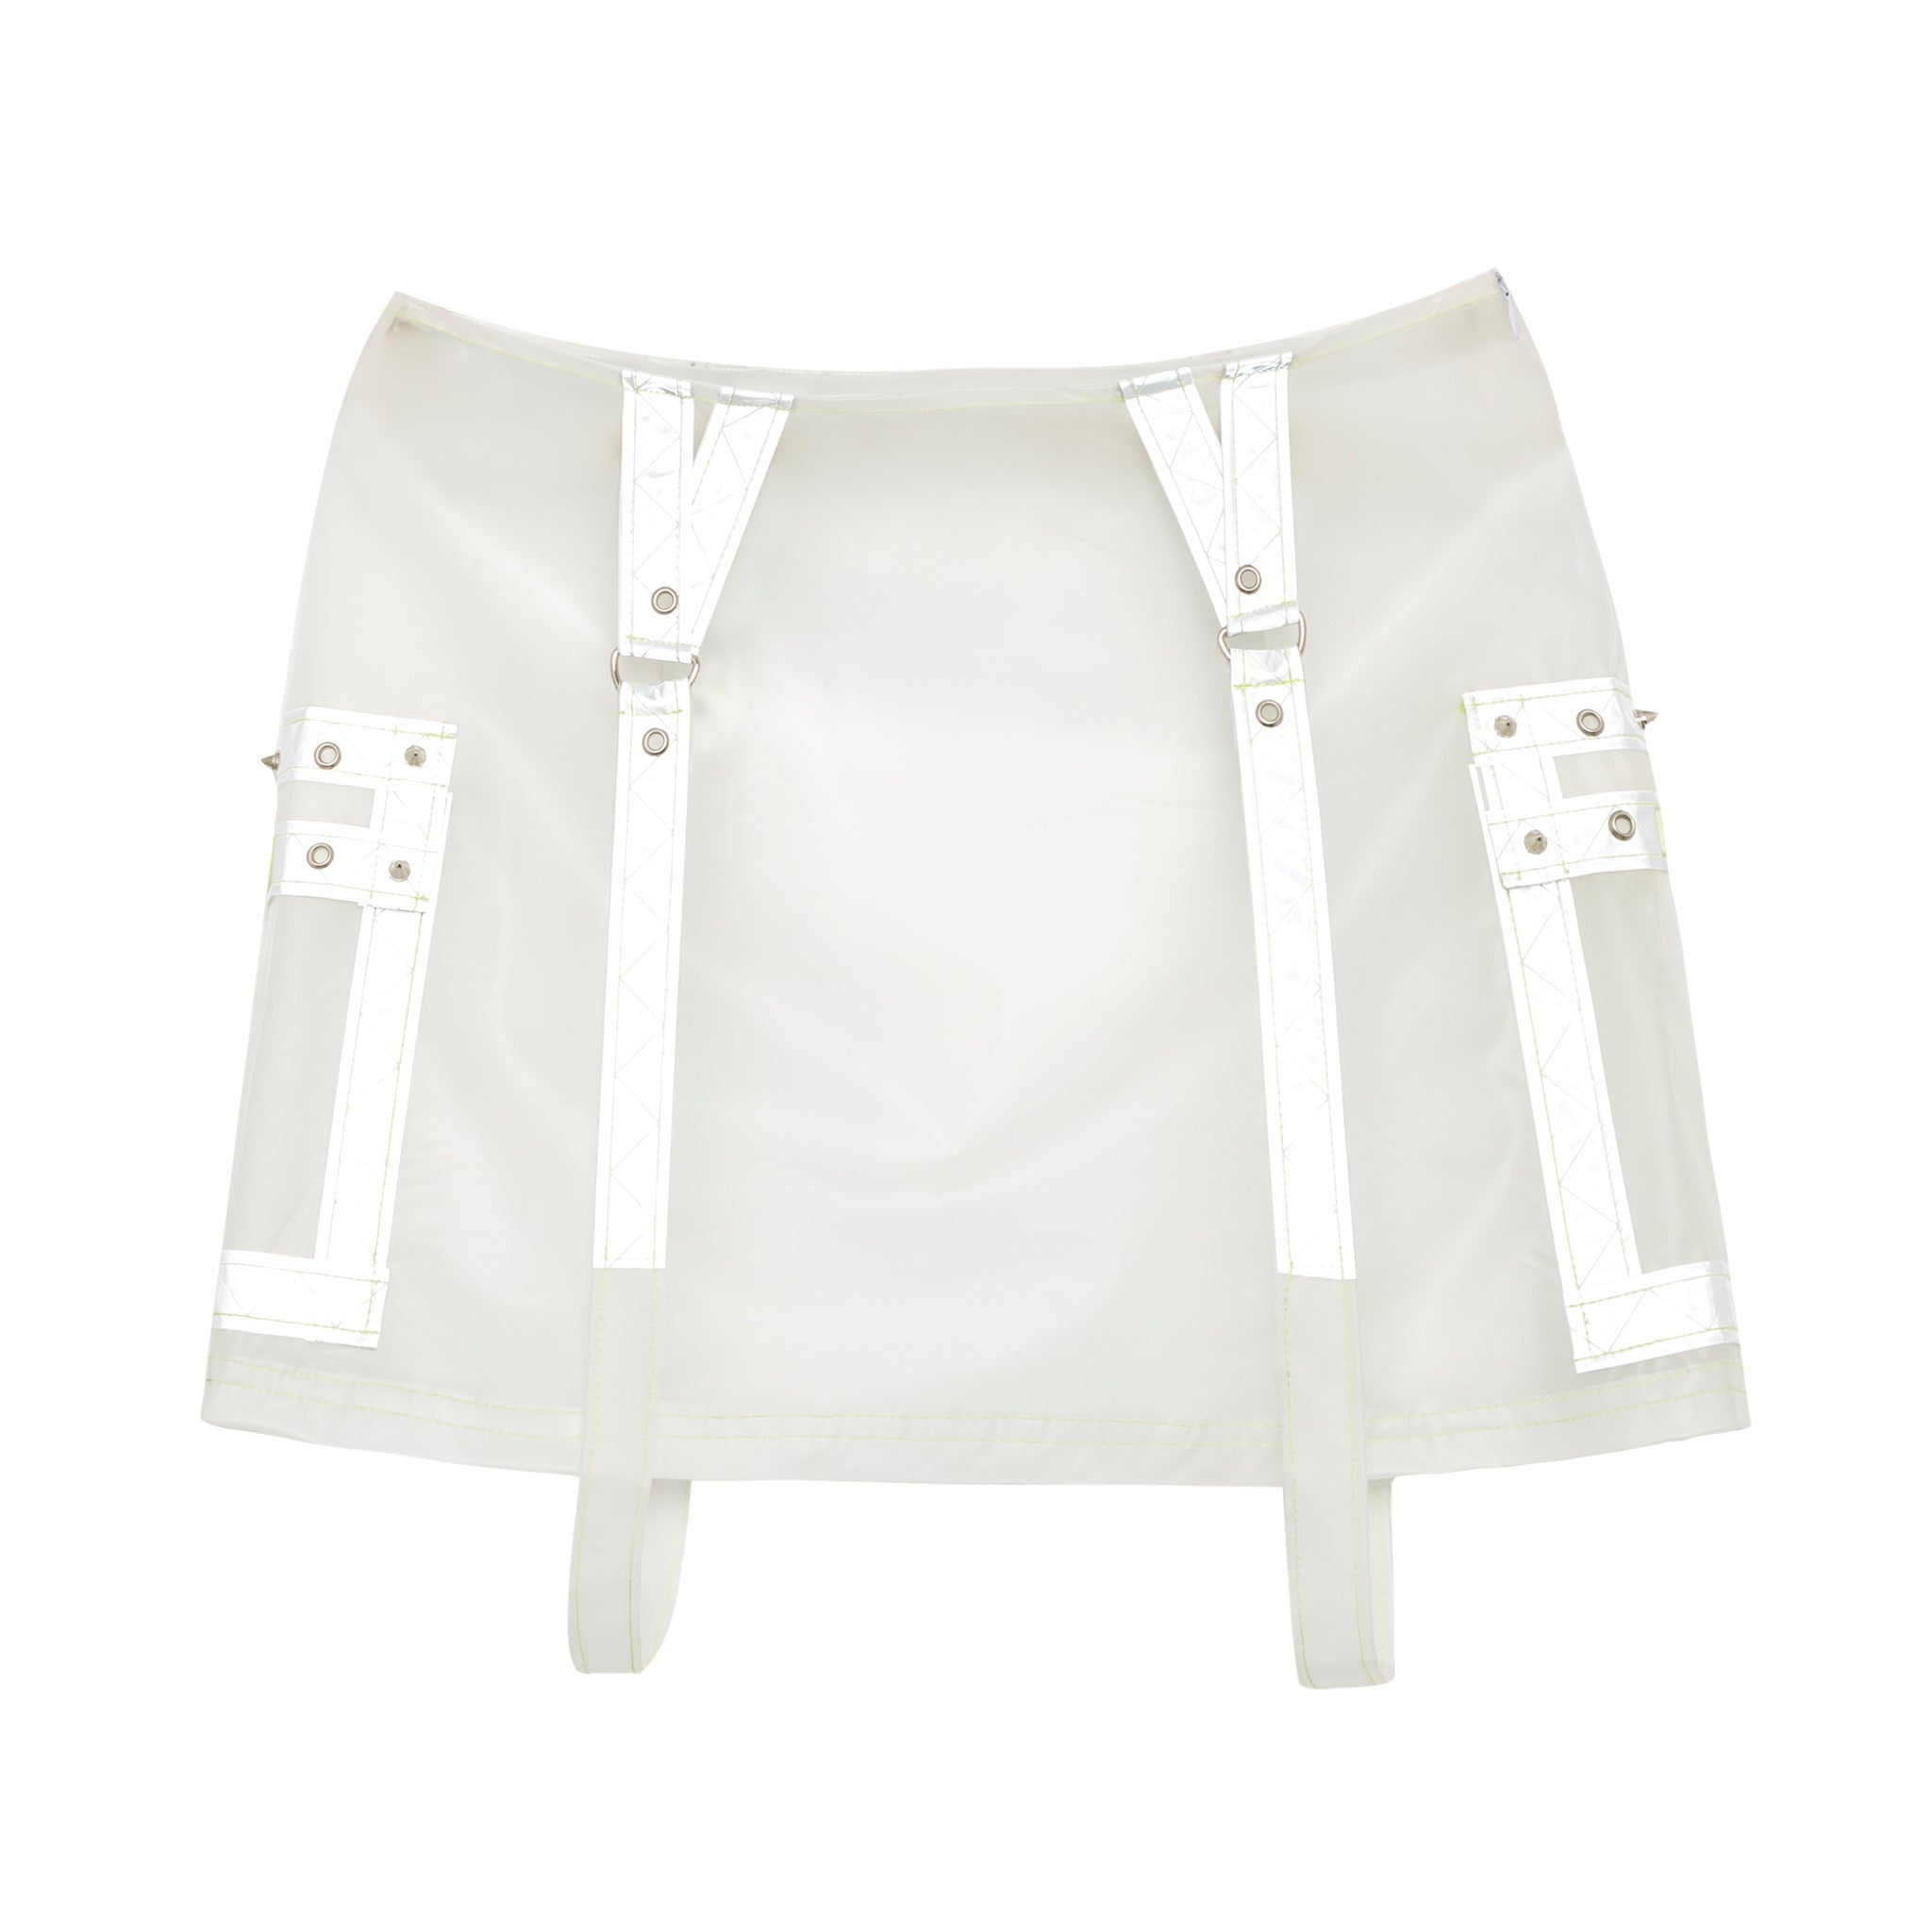 SAMPLE Crystal Skirt